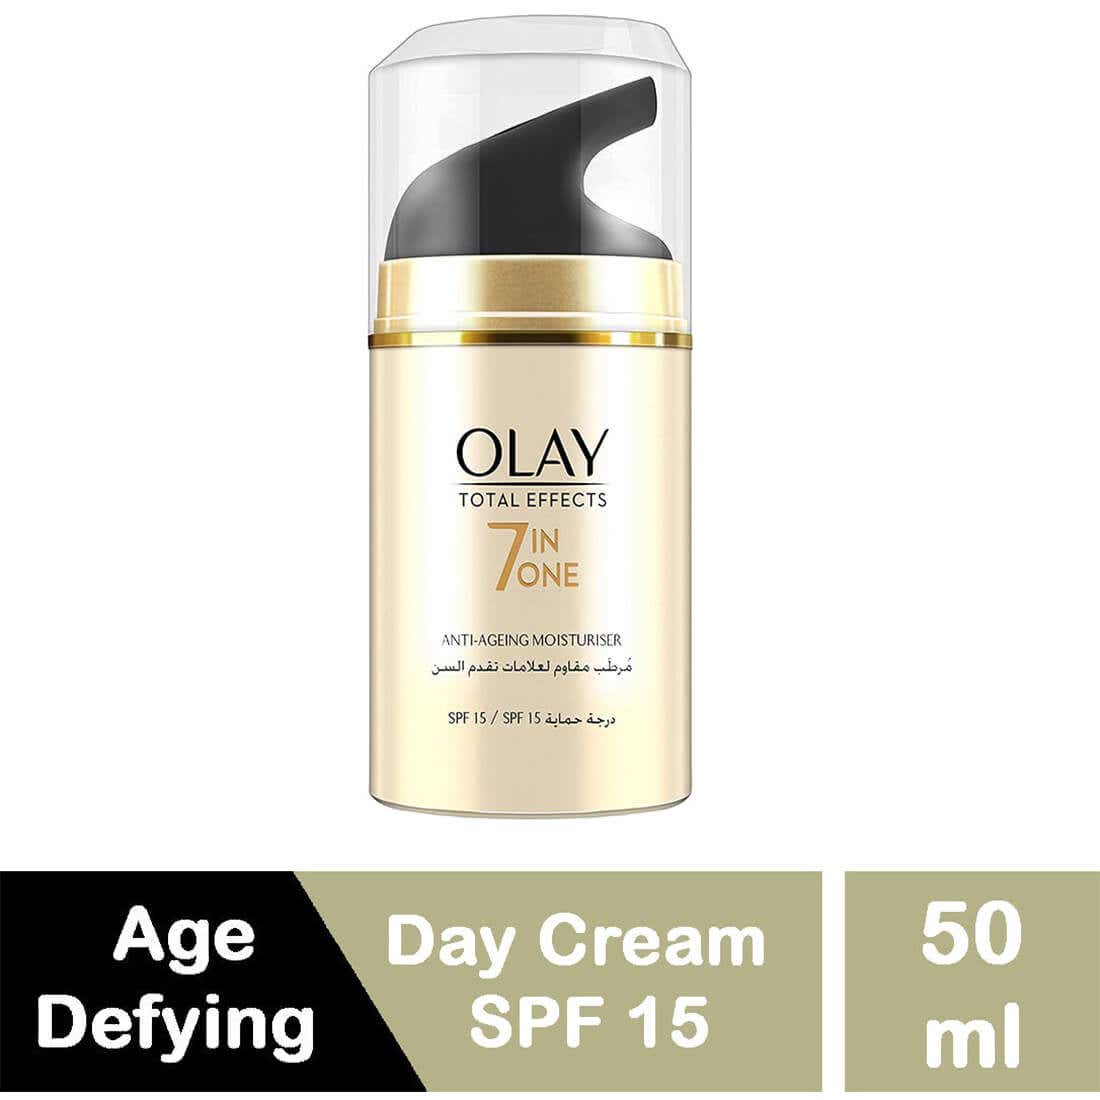 Olay Cream Moisturizer SPF 15 50 ml